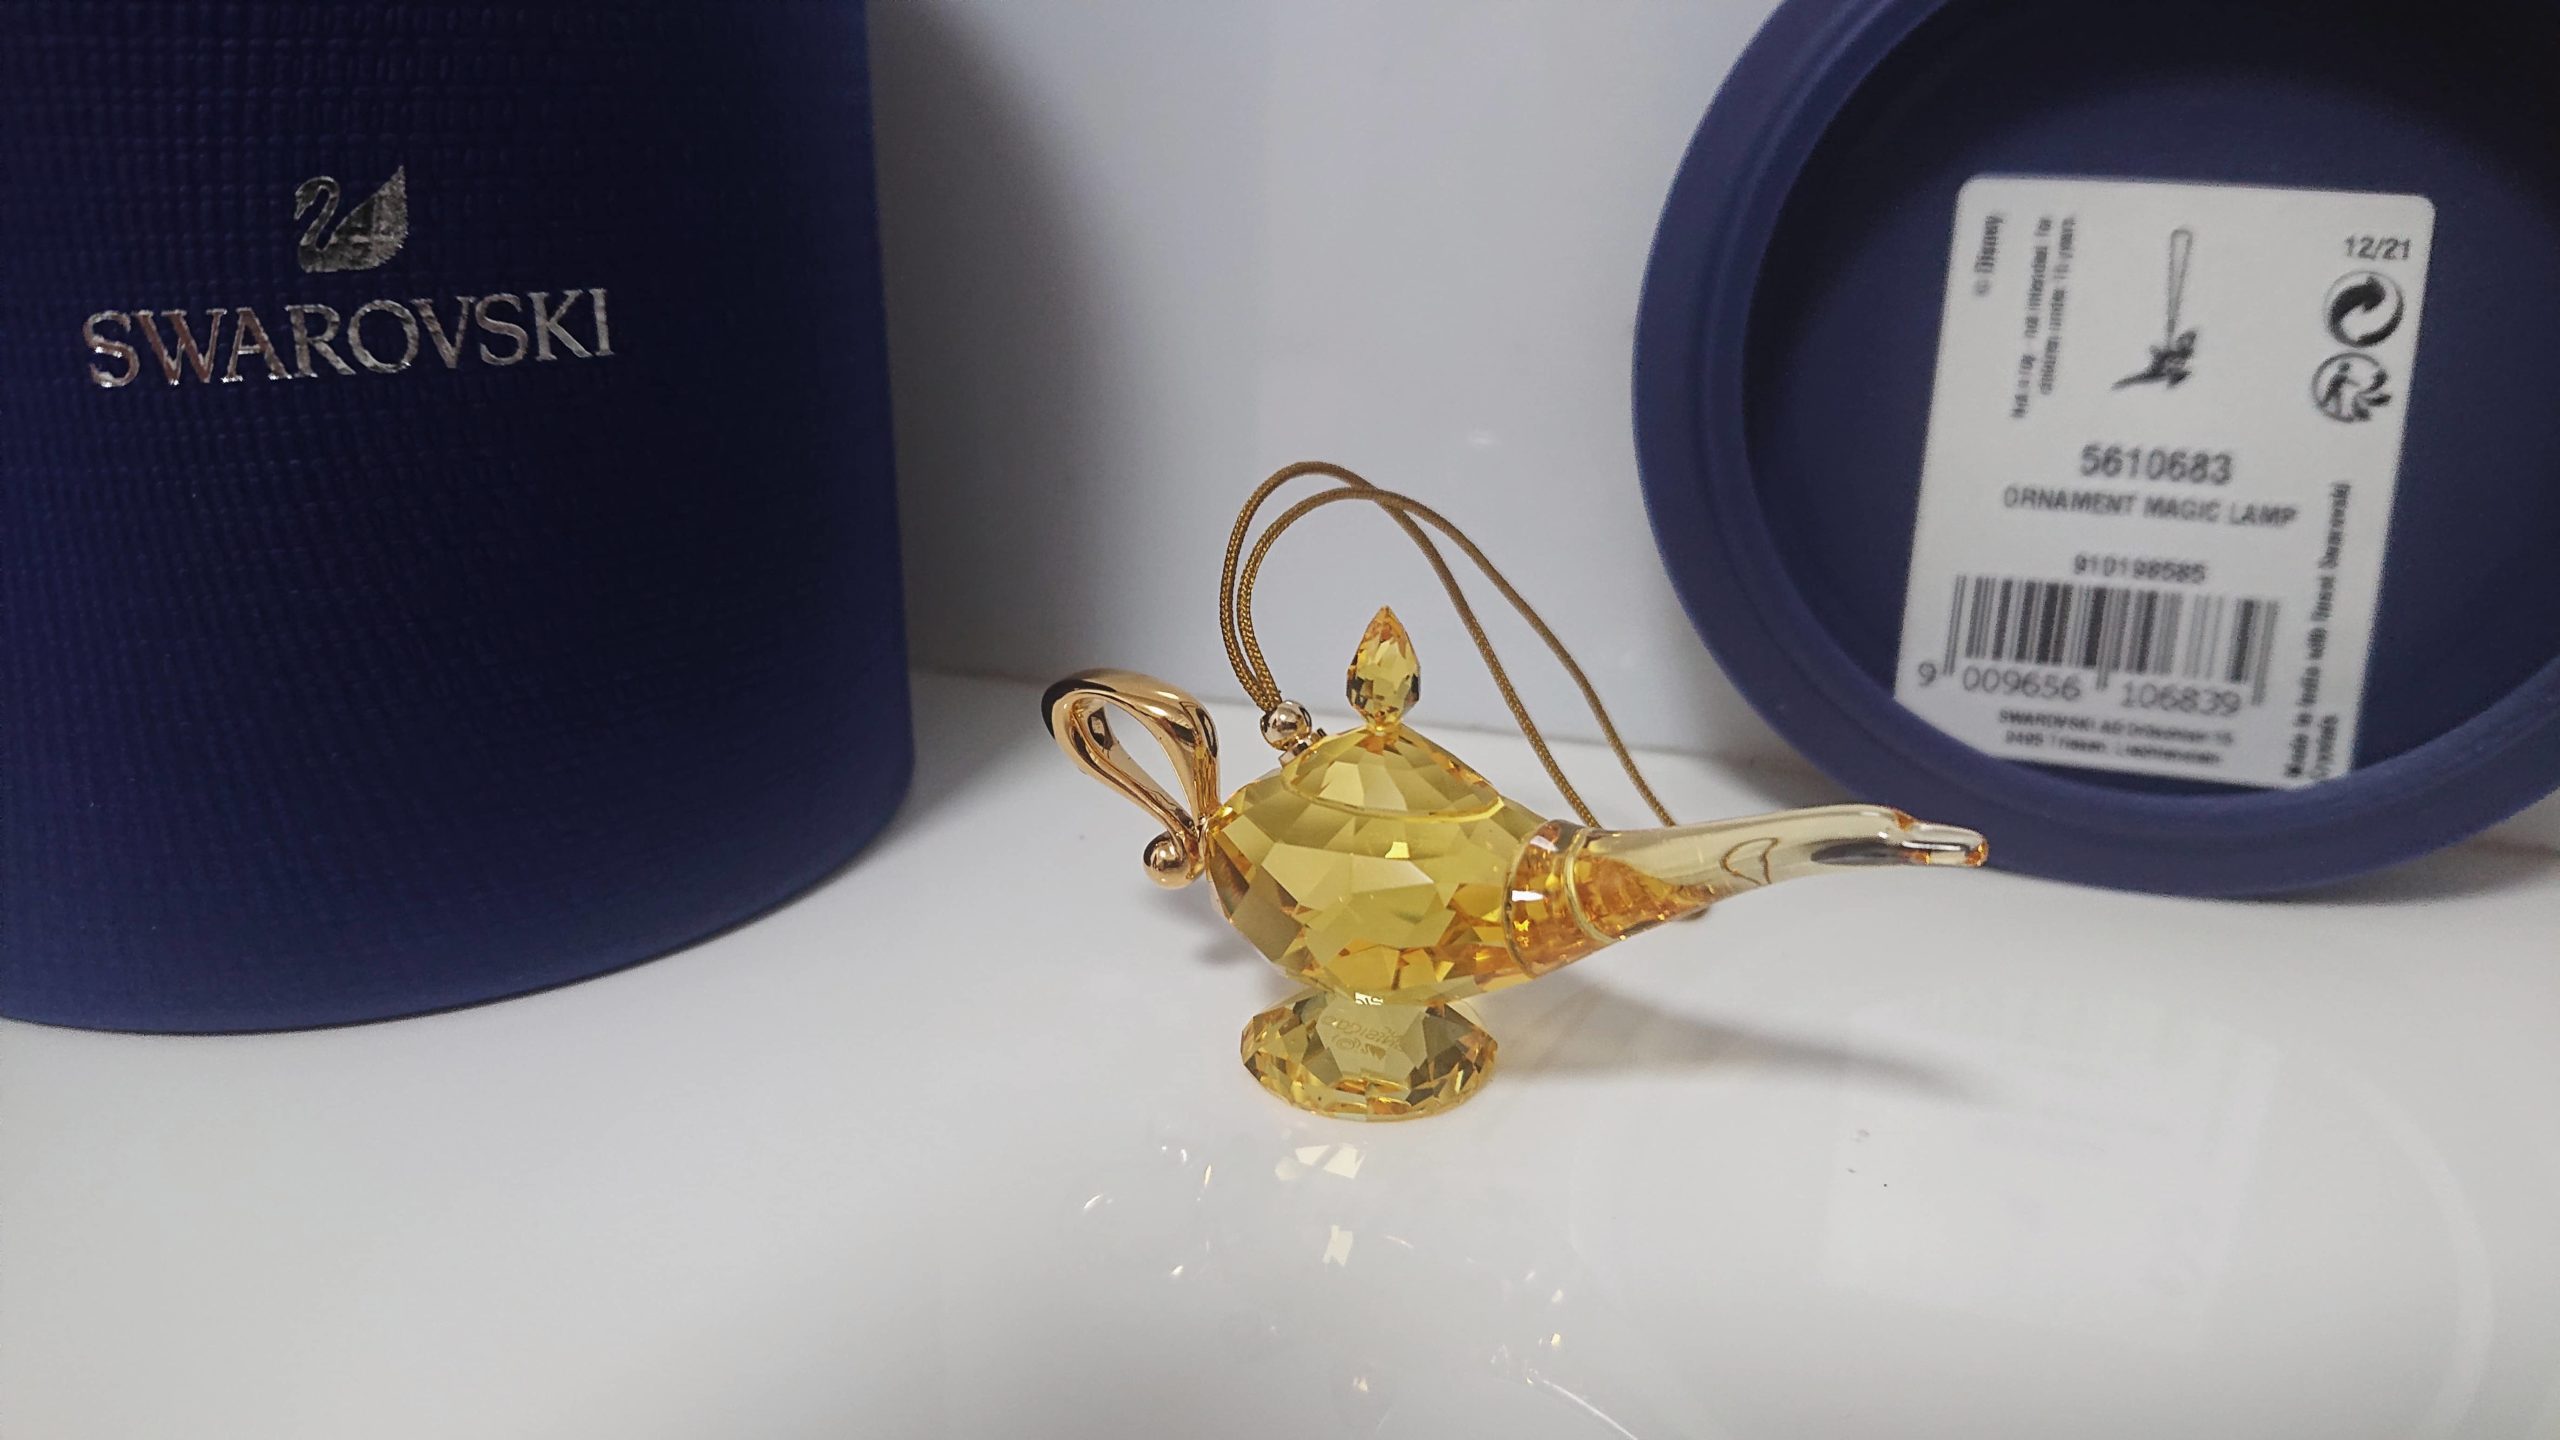 Swarovski Disney Collectorshop 5610683 Ornament Lamp Sammler - Wunderlampe Aladdin Magic